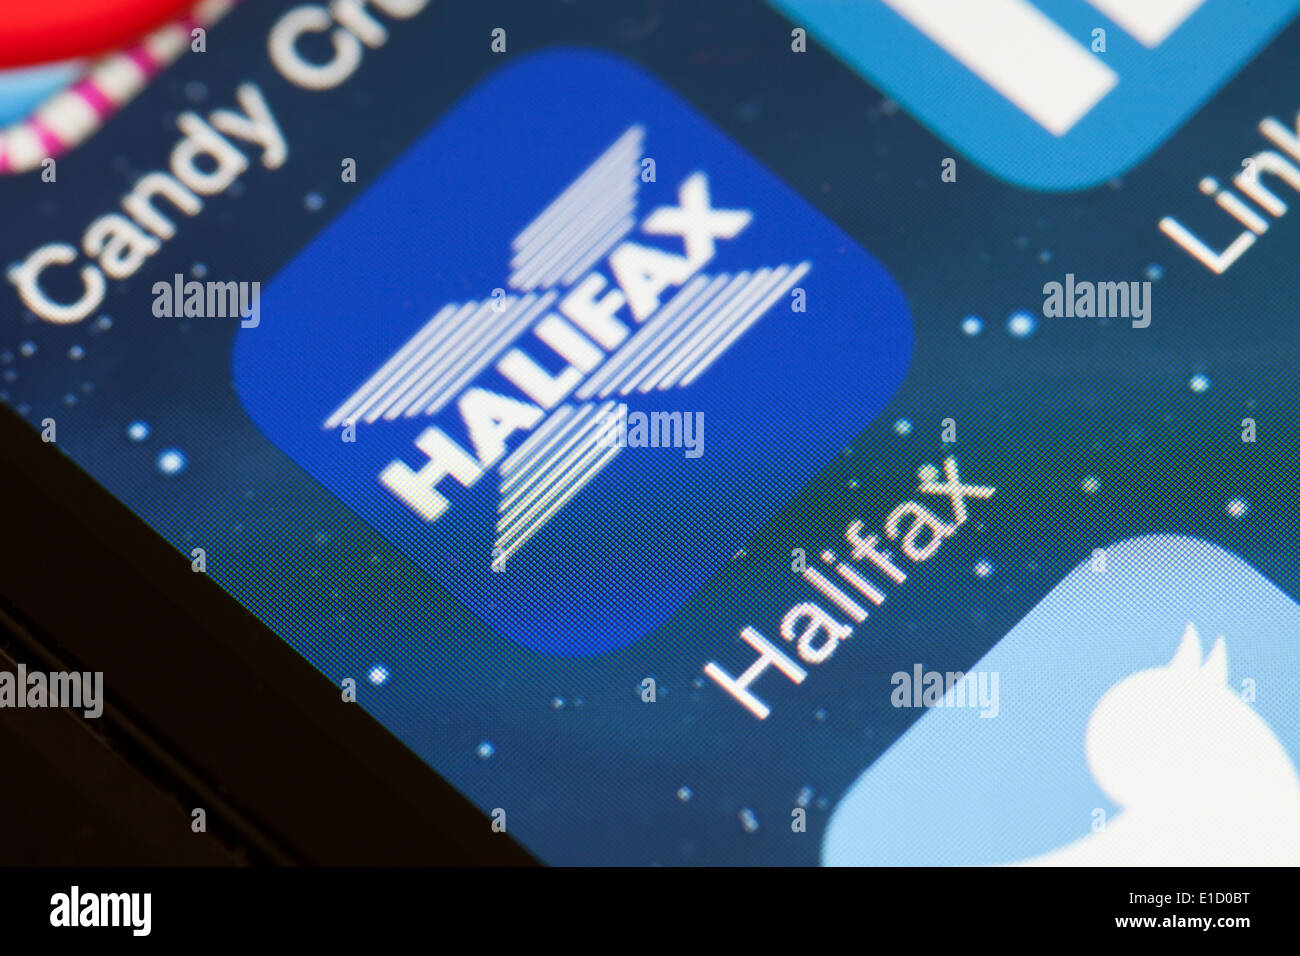 Halifax app icon on mobile phone. Stock Photo